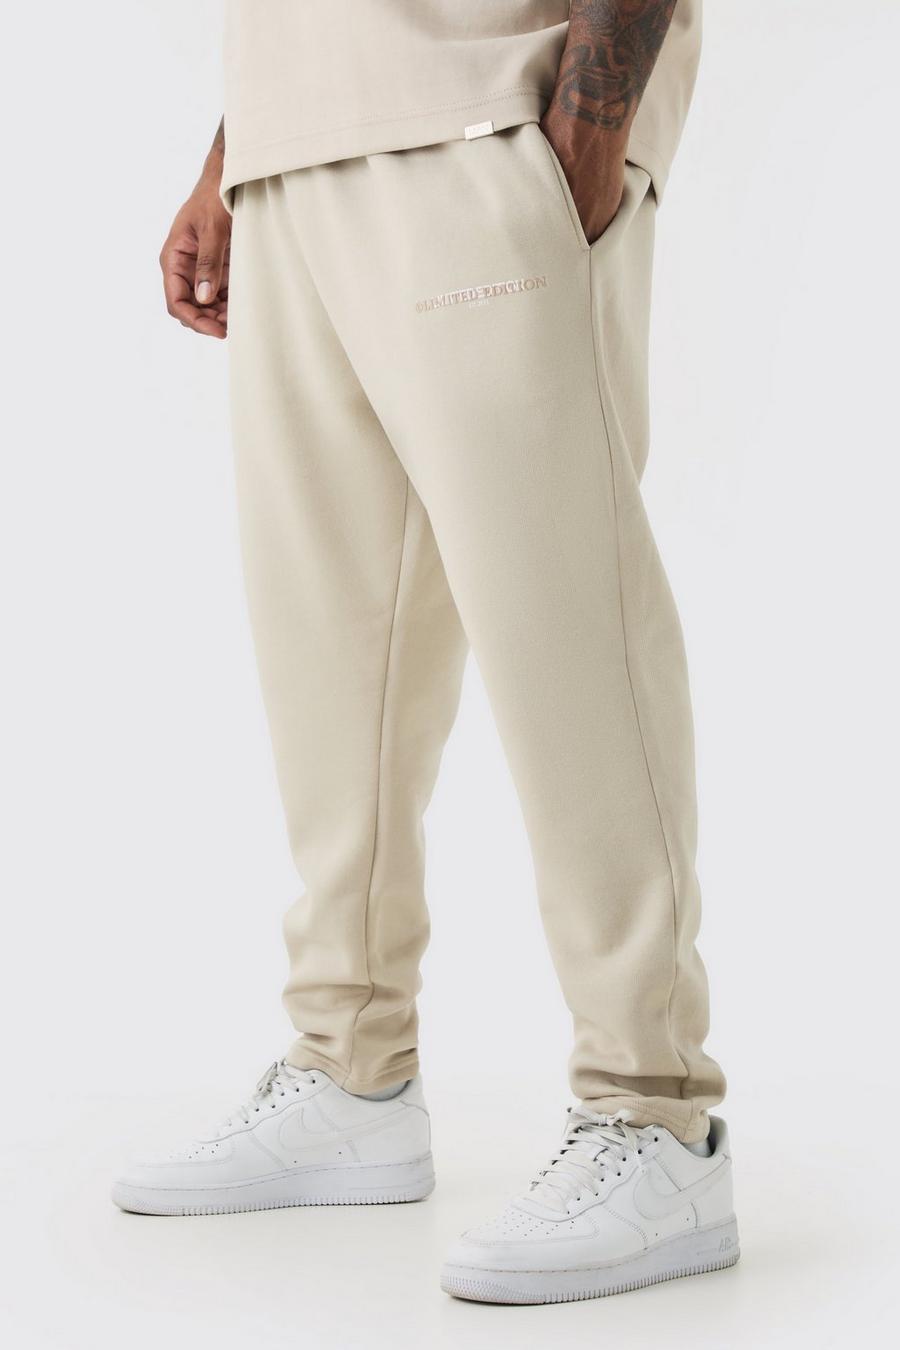 Pantaloni tuta Plus Size Basic affusolati Limited, Stone